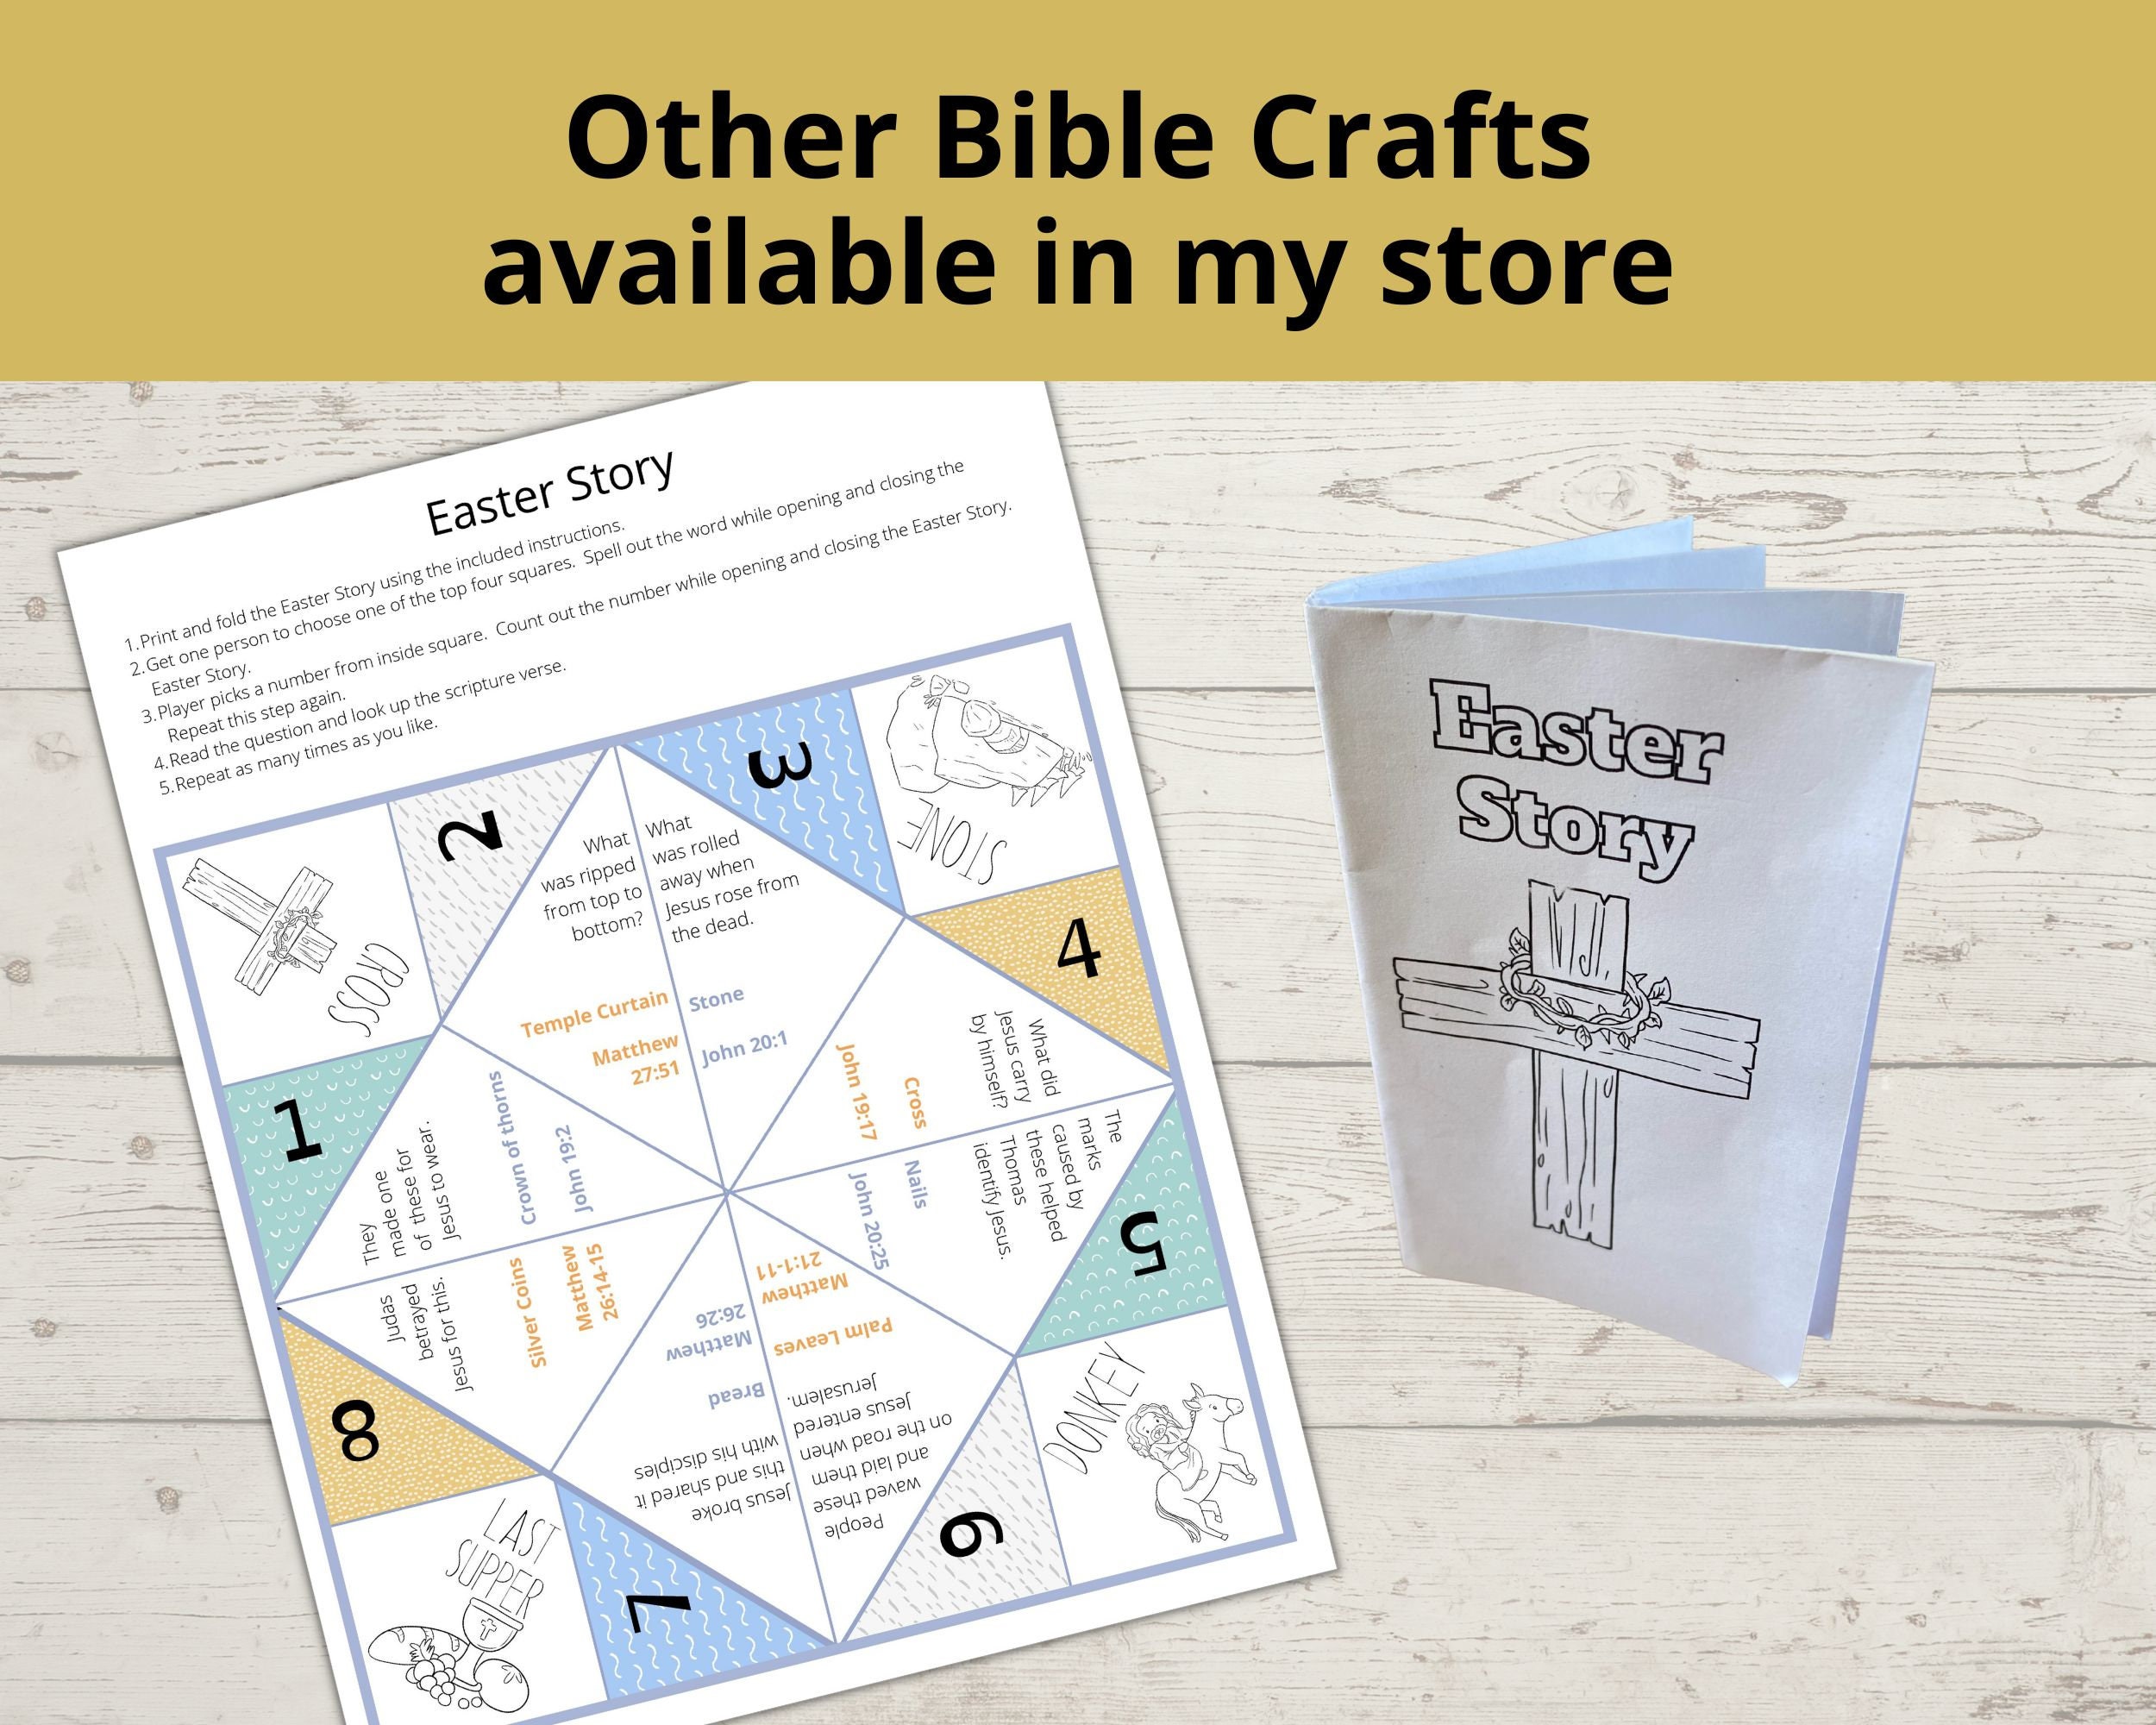 Books of the Bible Flipbook, Sunday School Craft, Bible Printable, Bible  Lesson, Books of the Bible Printable 